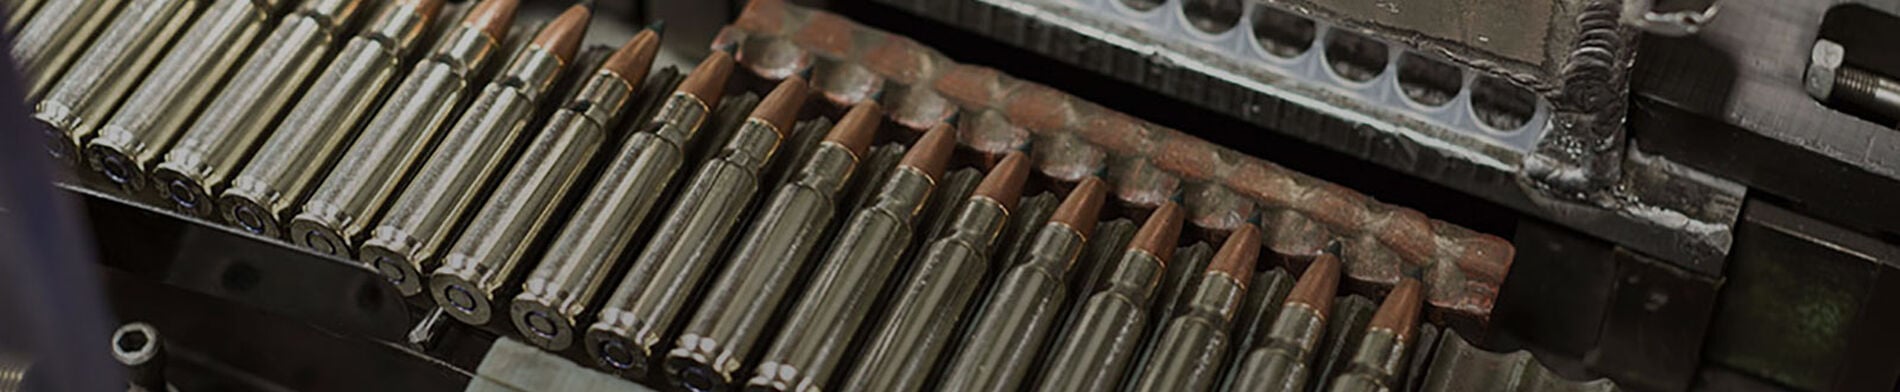 Ammunition on Conveyor